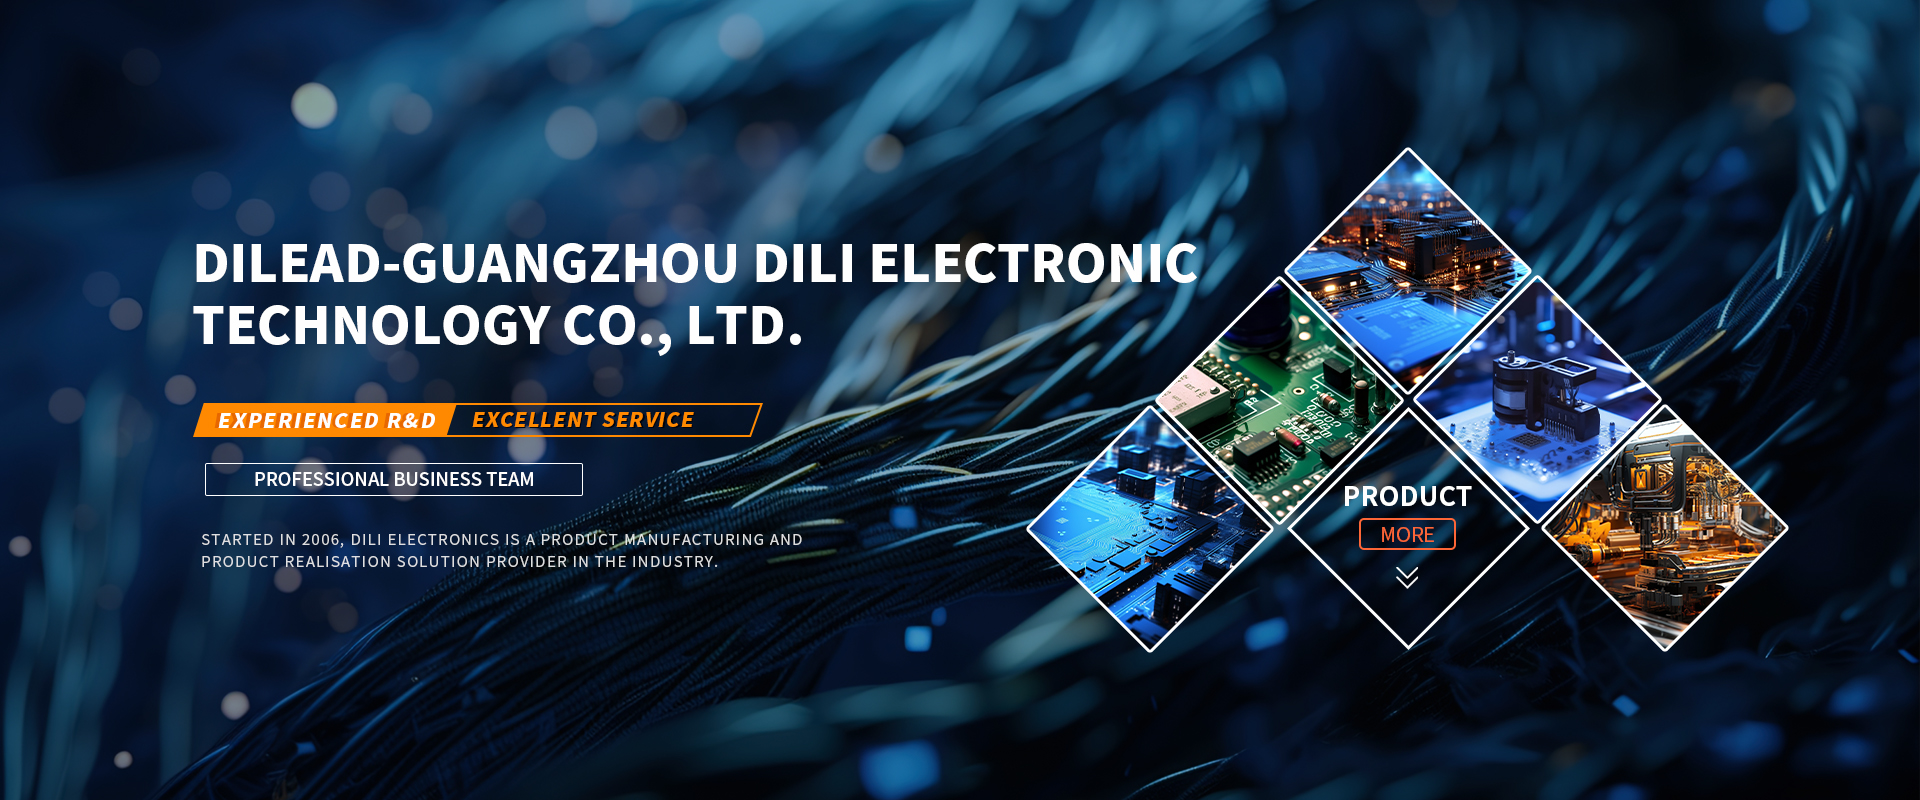 DILEAD-GUANGZHOU DILI ELECTRONIC TECHNOLOGY CO., LTD.